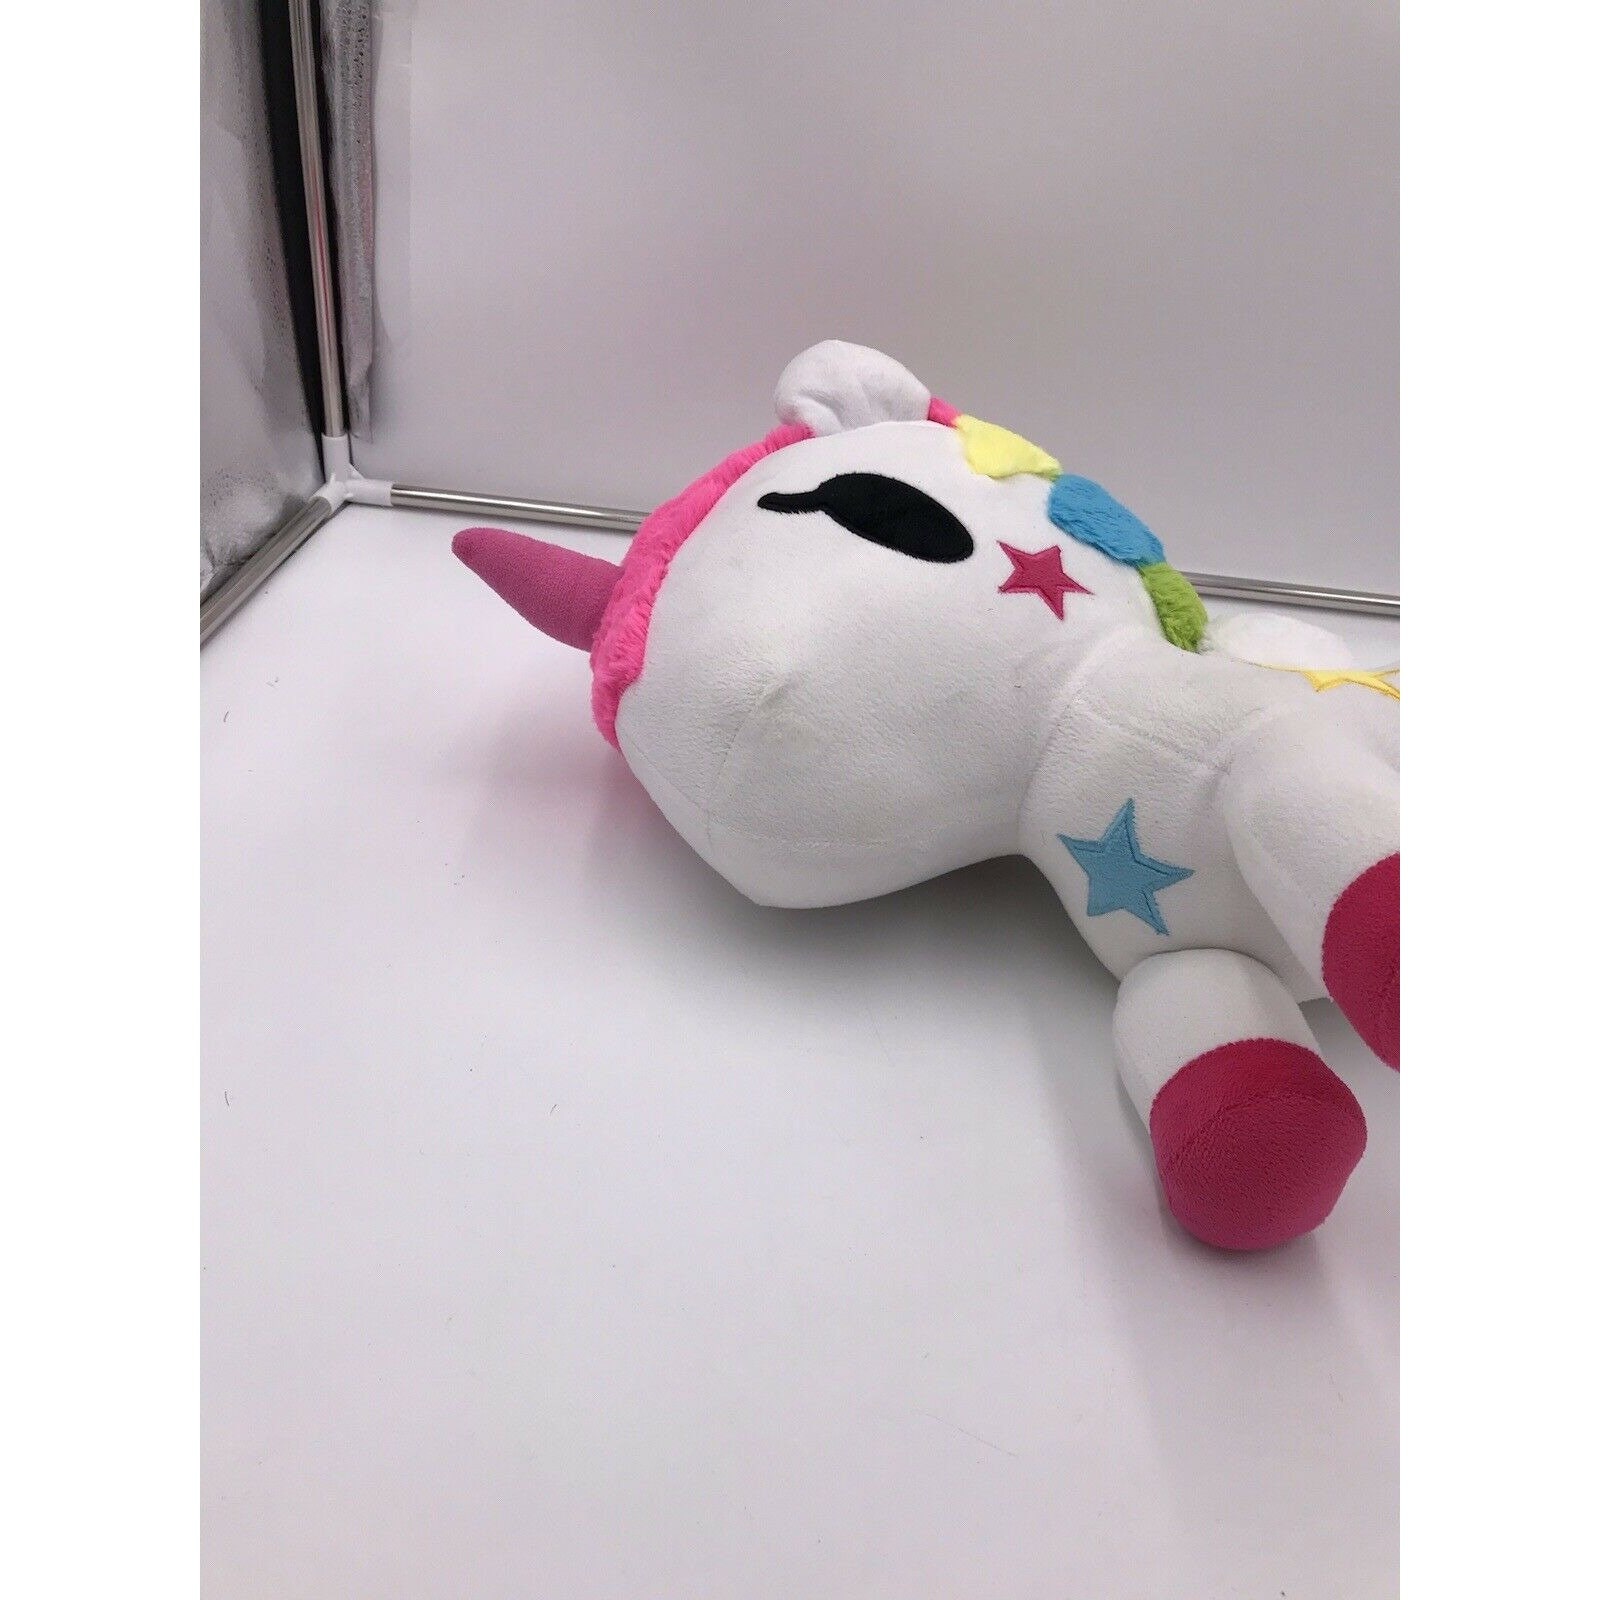 Neon Star Tokidoki Plush Unicorno Ruby Strawberry Unicorn XL 16”